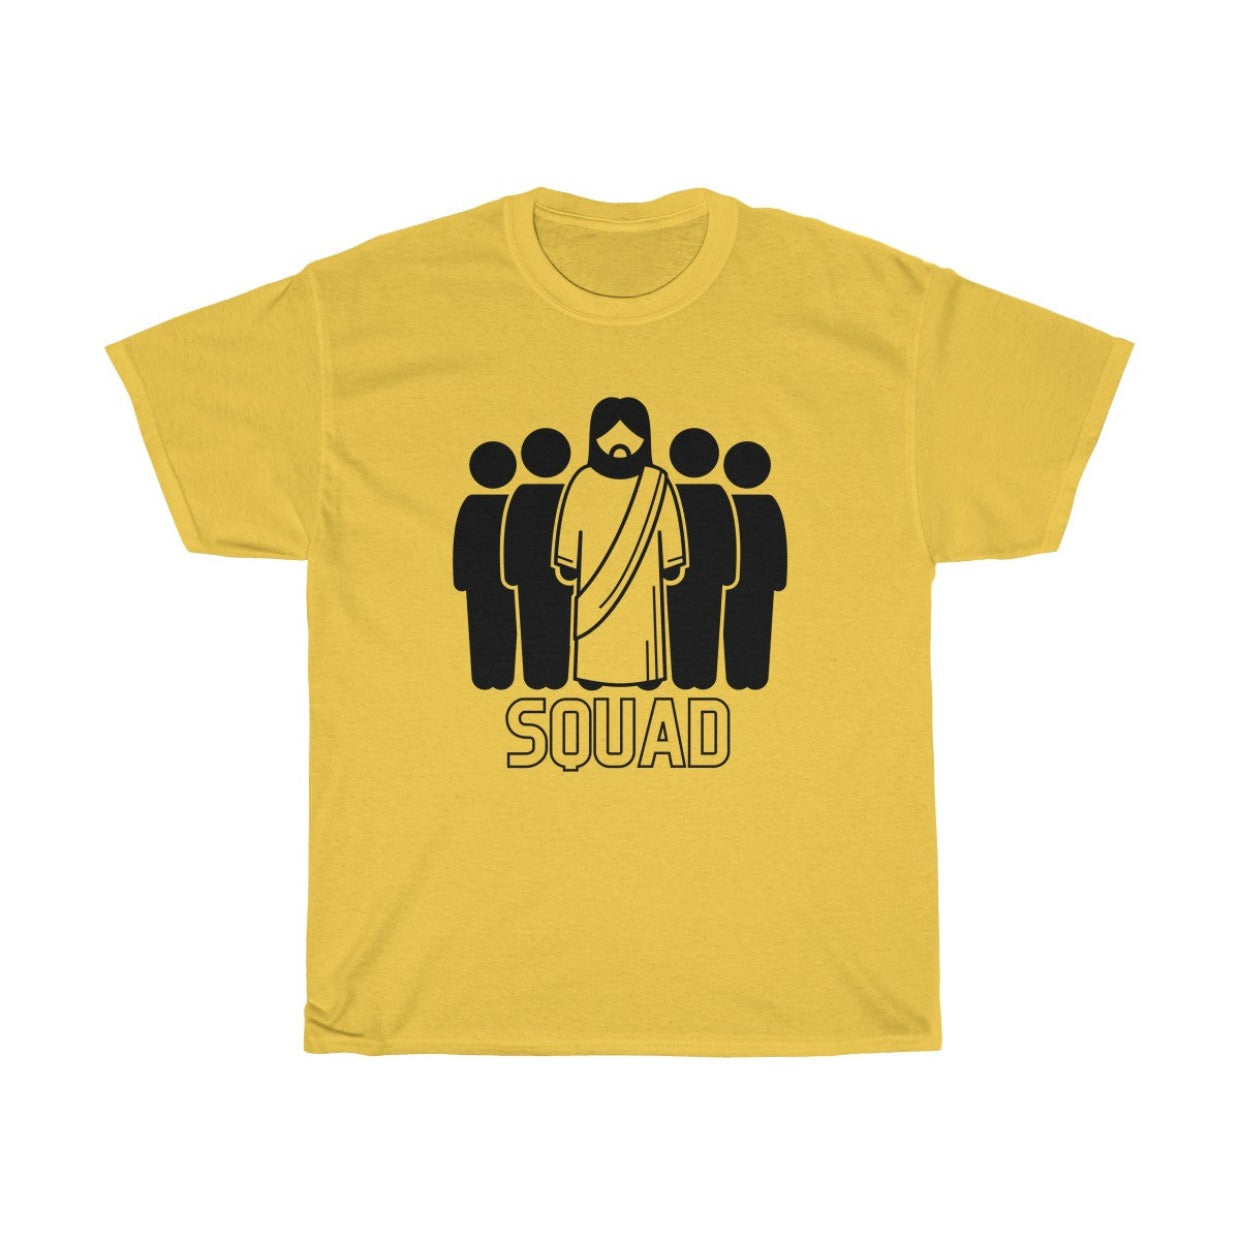 Squad - Adult Christian Shirt | LifeSpring Shirts - LifeSpring Shirts